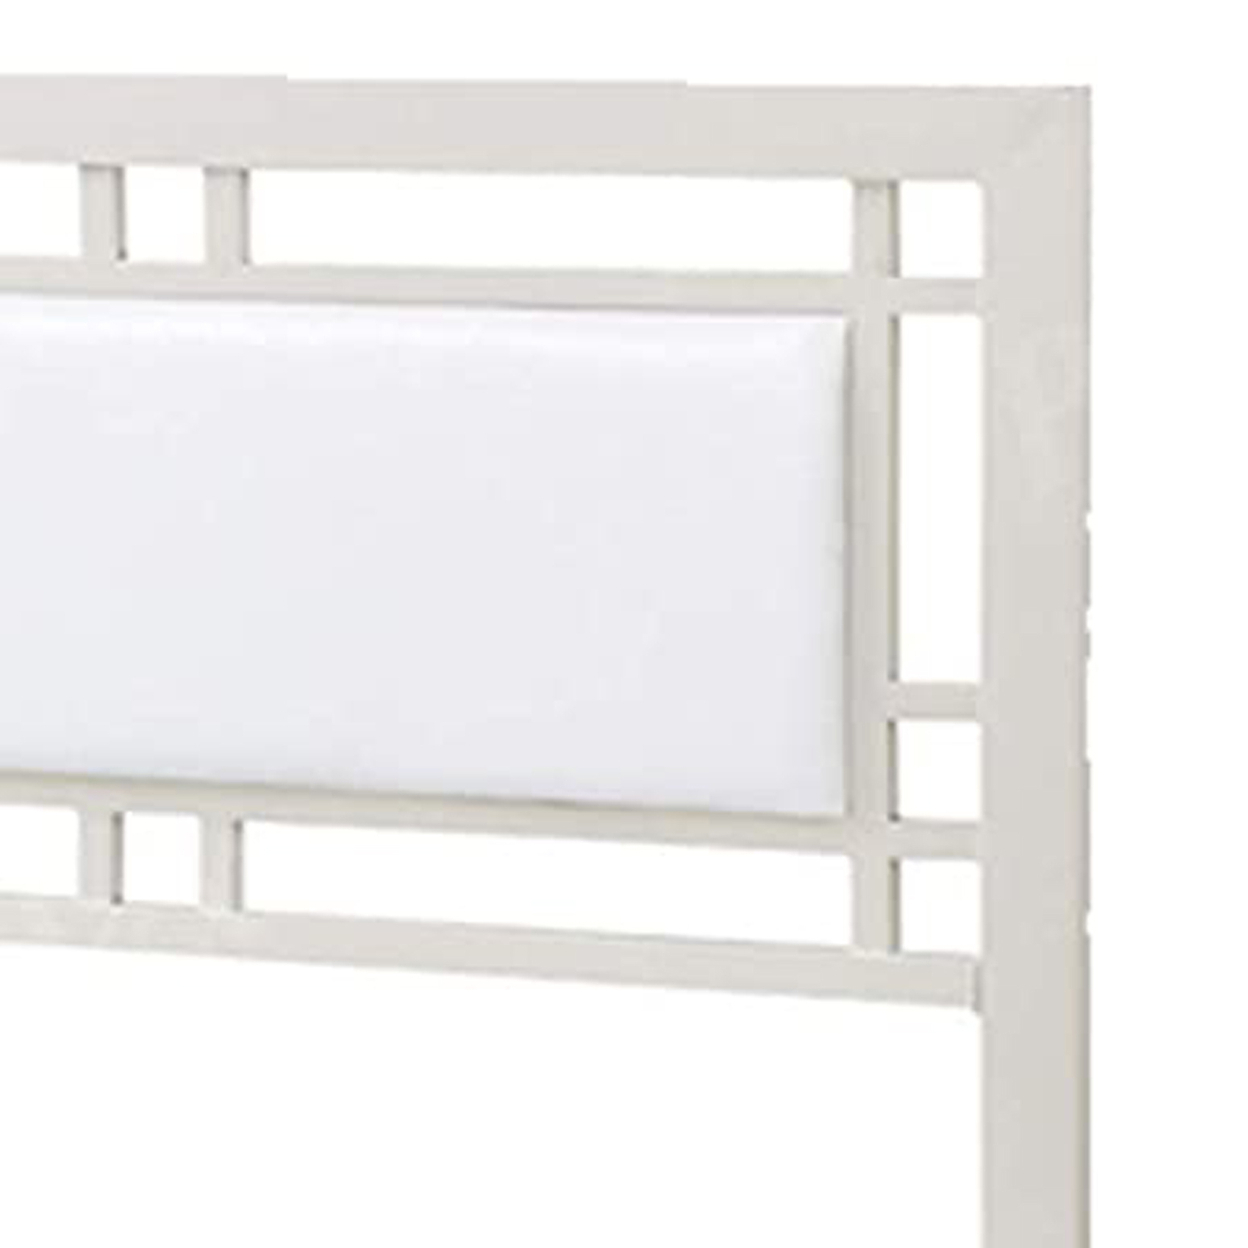 Metal Frame Full Bed With Leather Upholstered Headboard White- Saltoro Sherpi